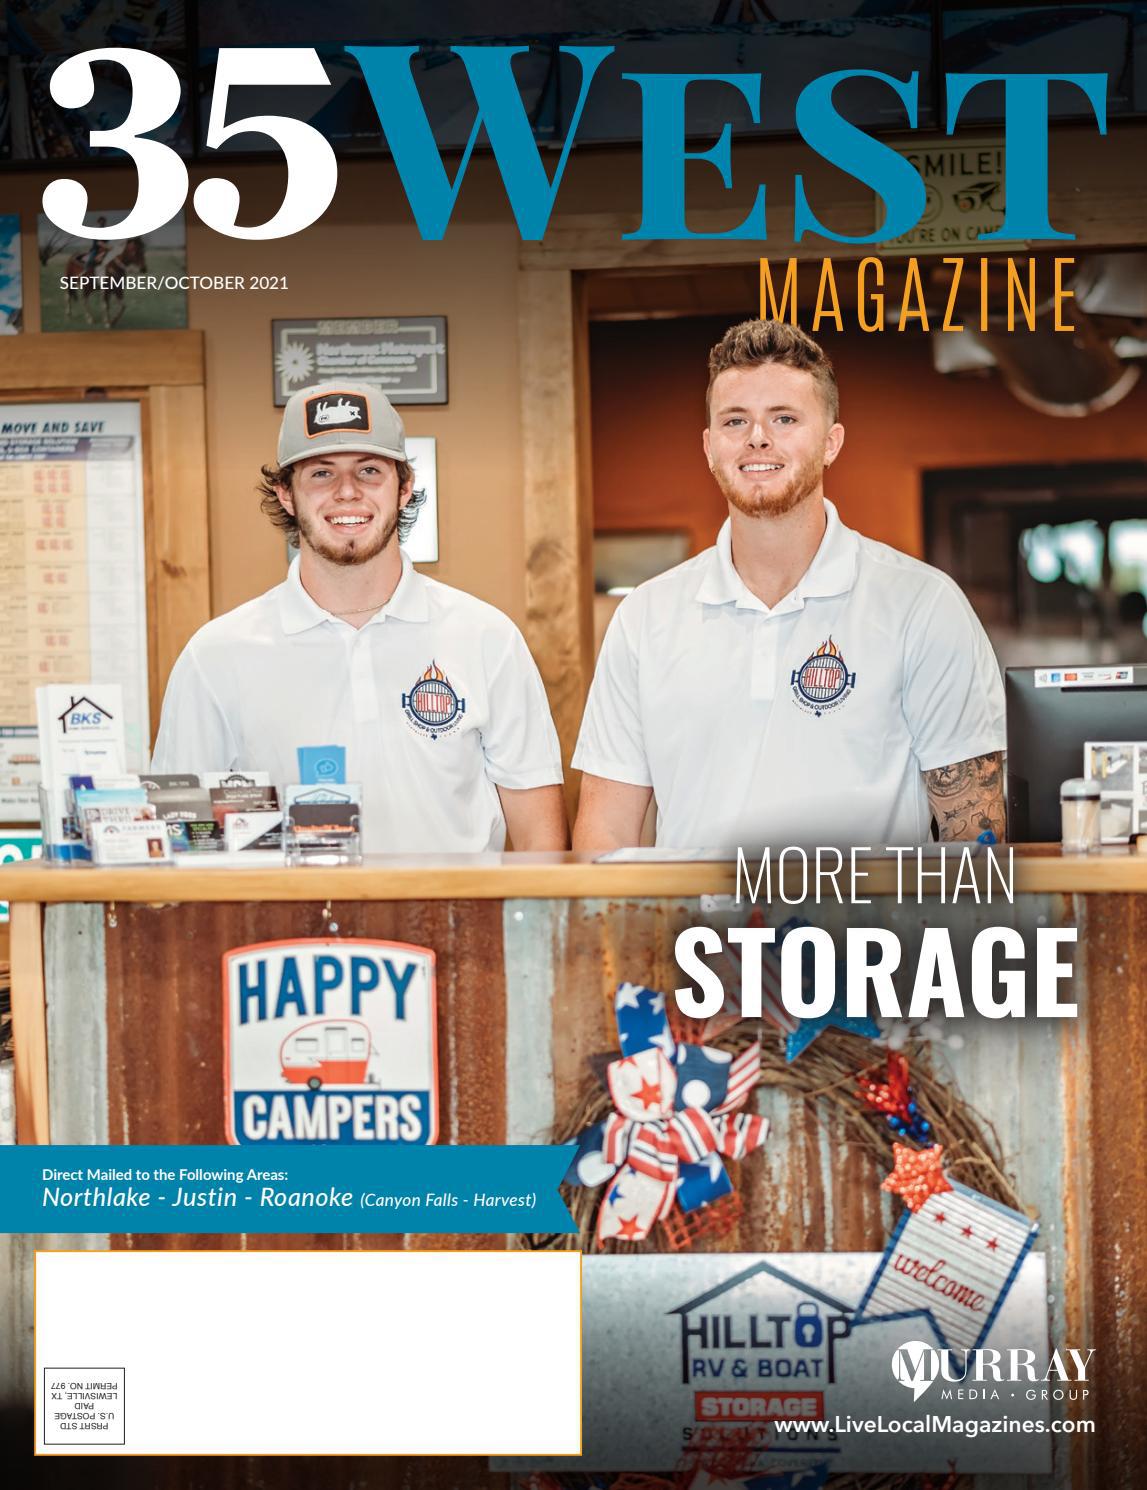 35 West Magazine September/October 2021